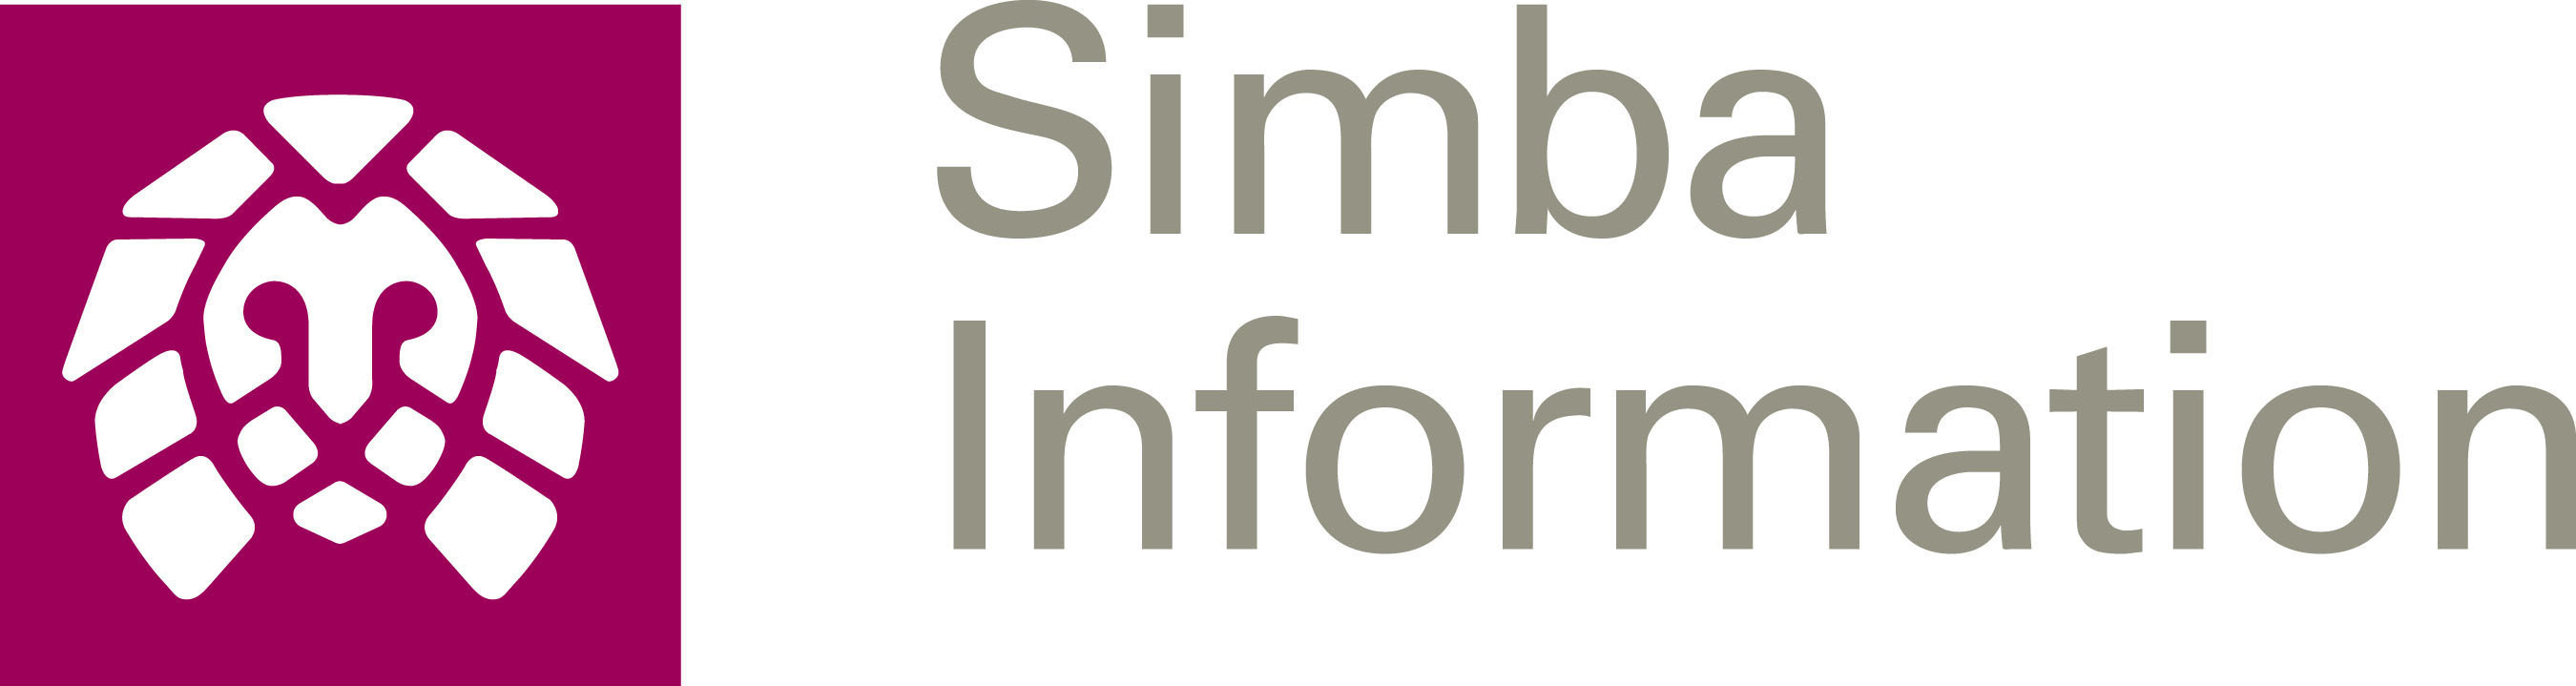 Simba Information Logo.